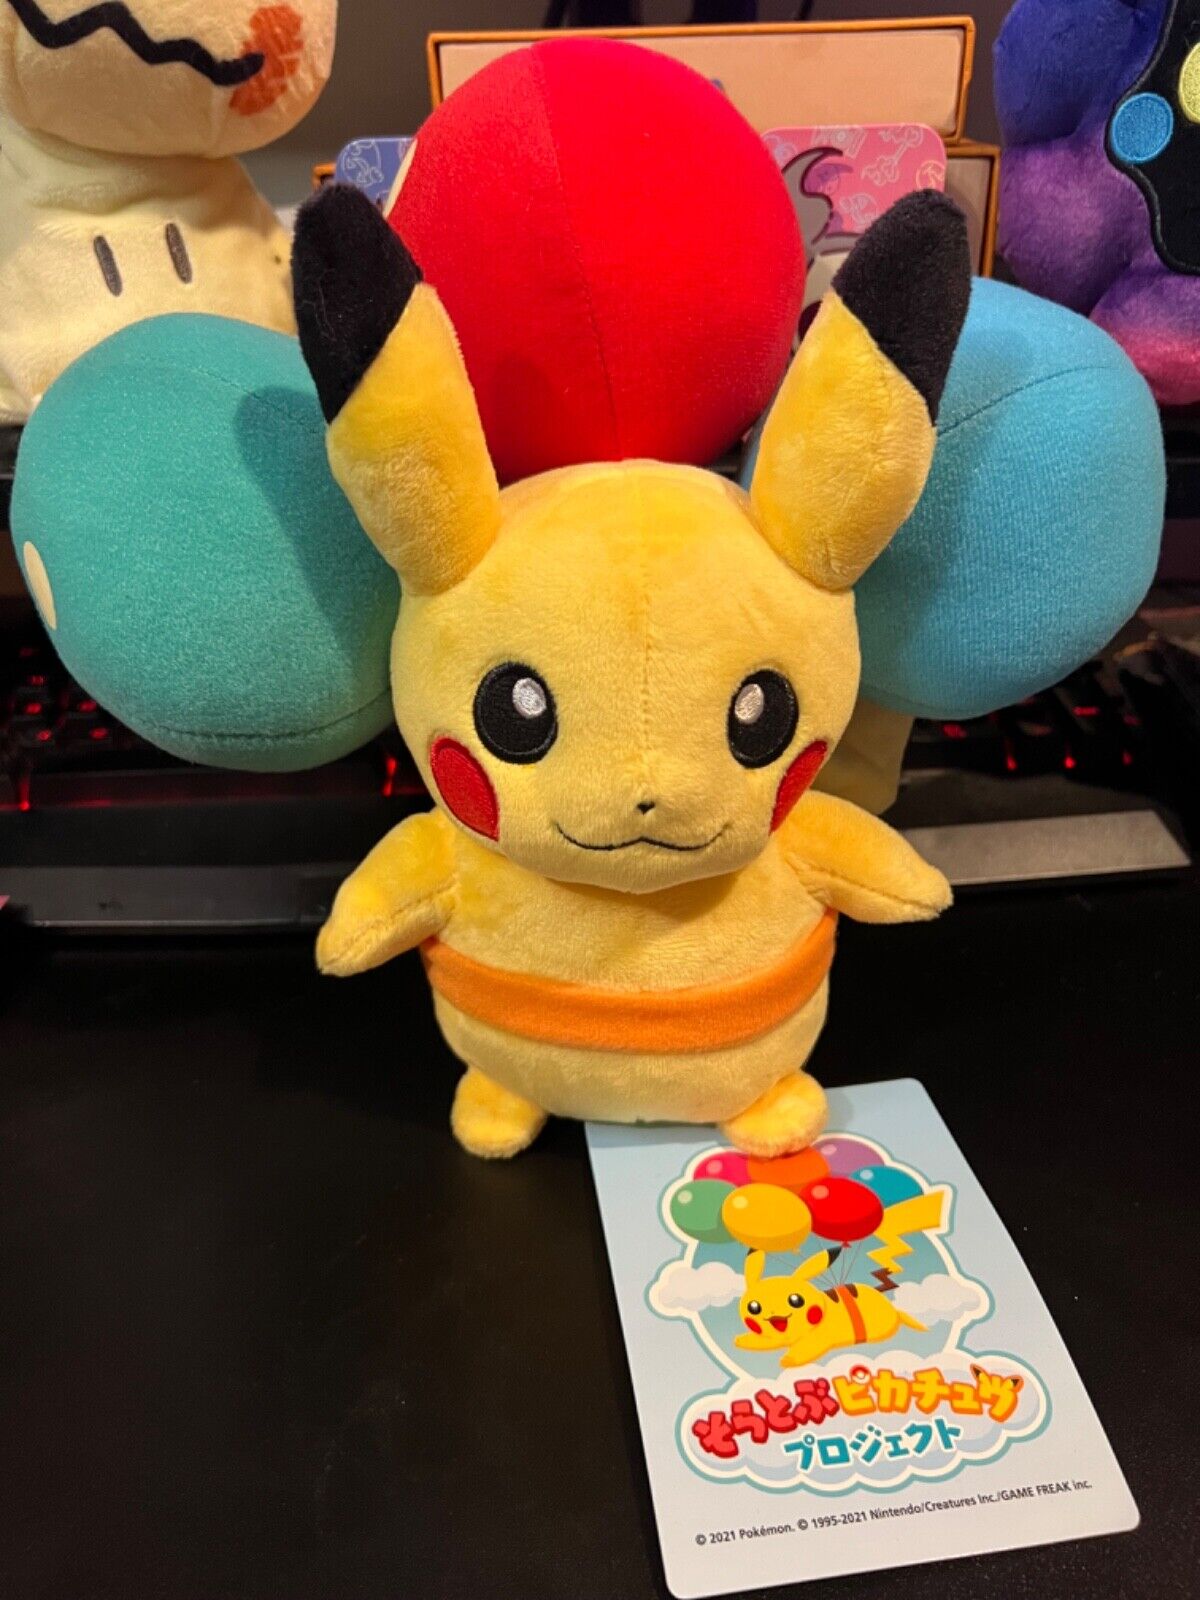 Exclusive Pokémon Center Okinawa Japan Limited Plush Ballon Pikachu 